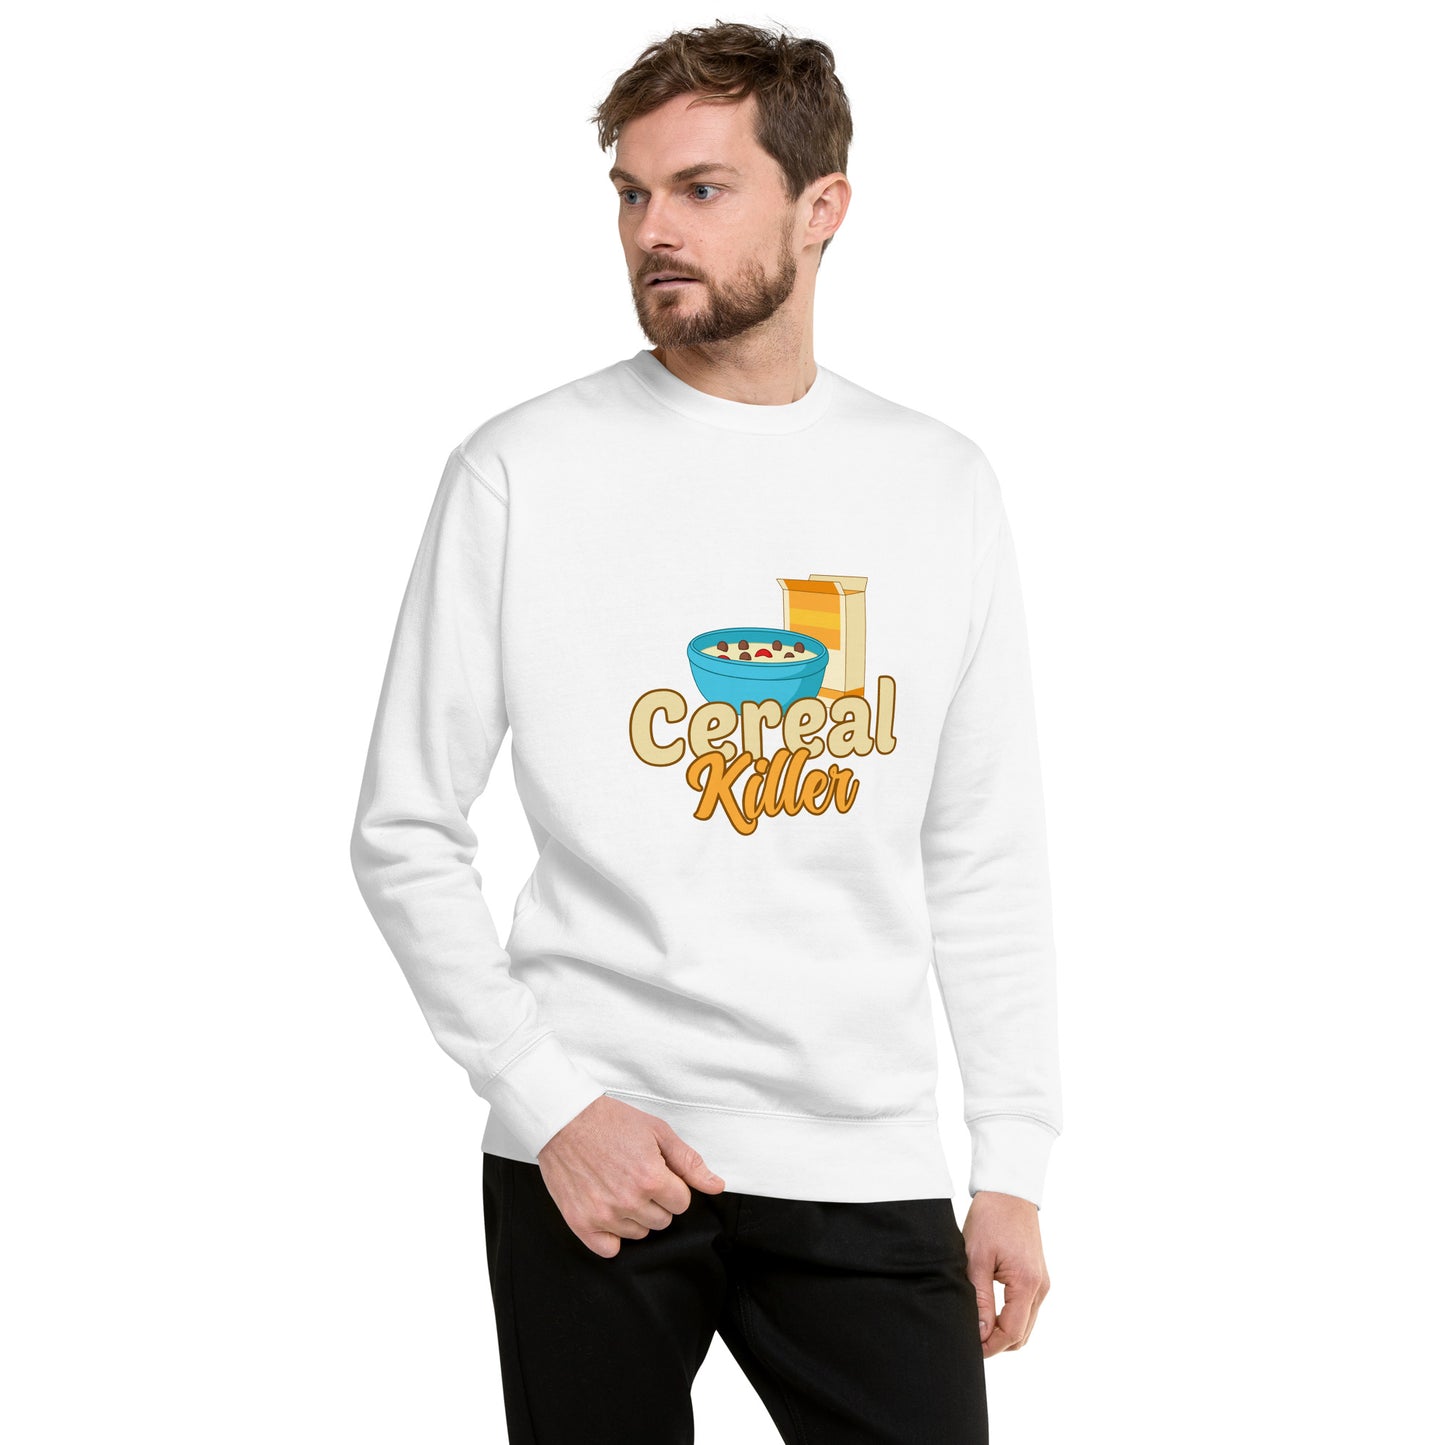 Cereal Killer Unisex Premium Sweatshirt